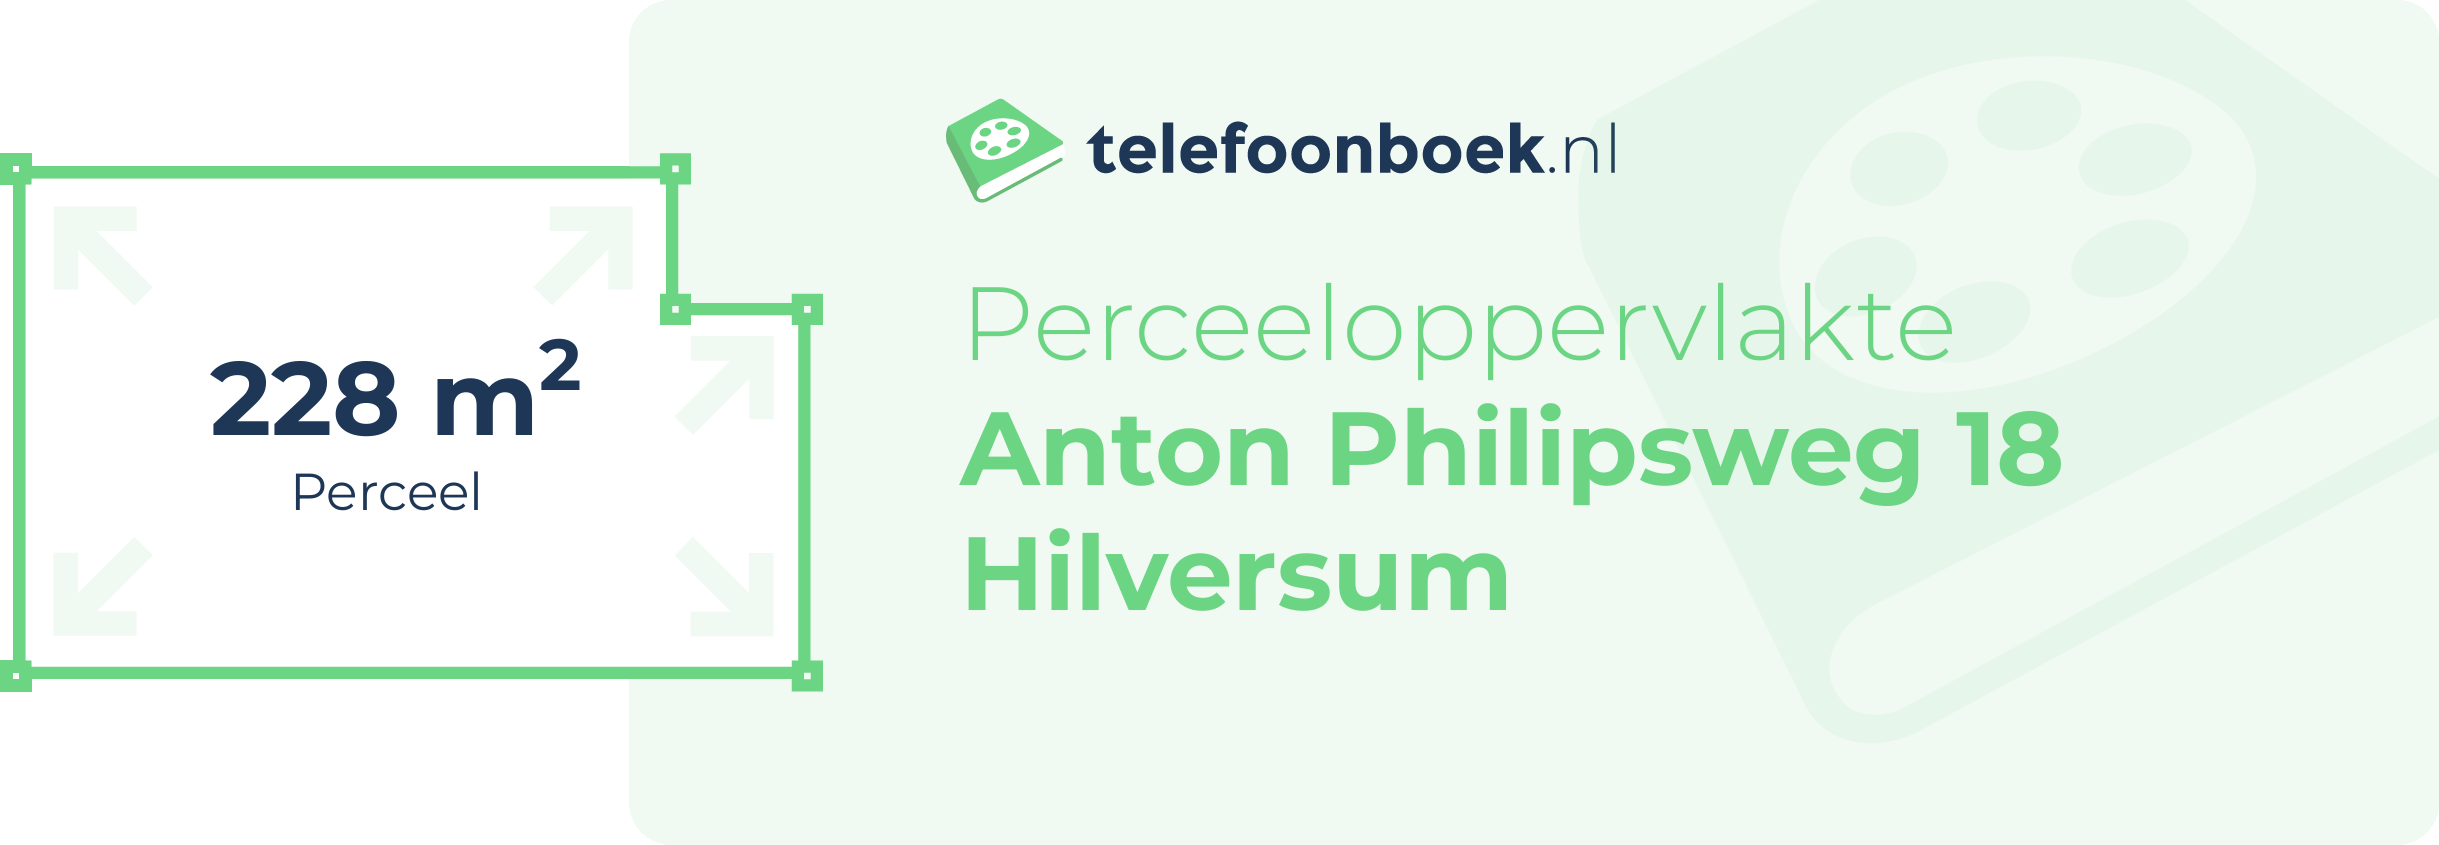 Perceeloppervlakte Anton Philipsweg 18 Hilversum